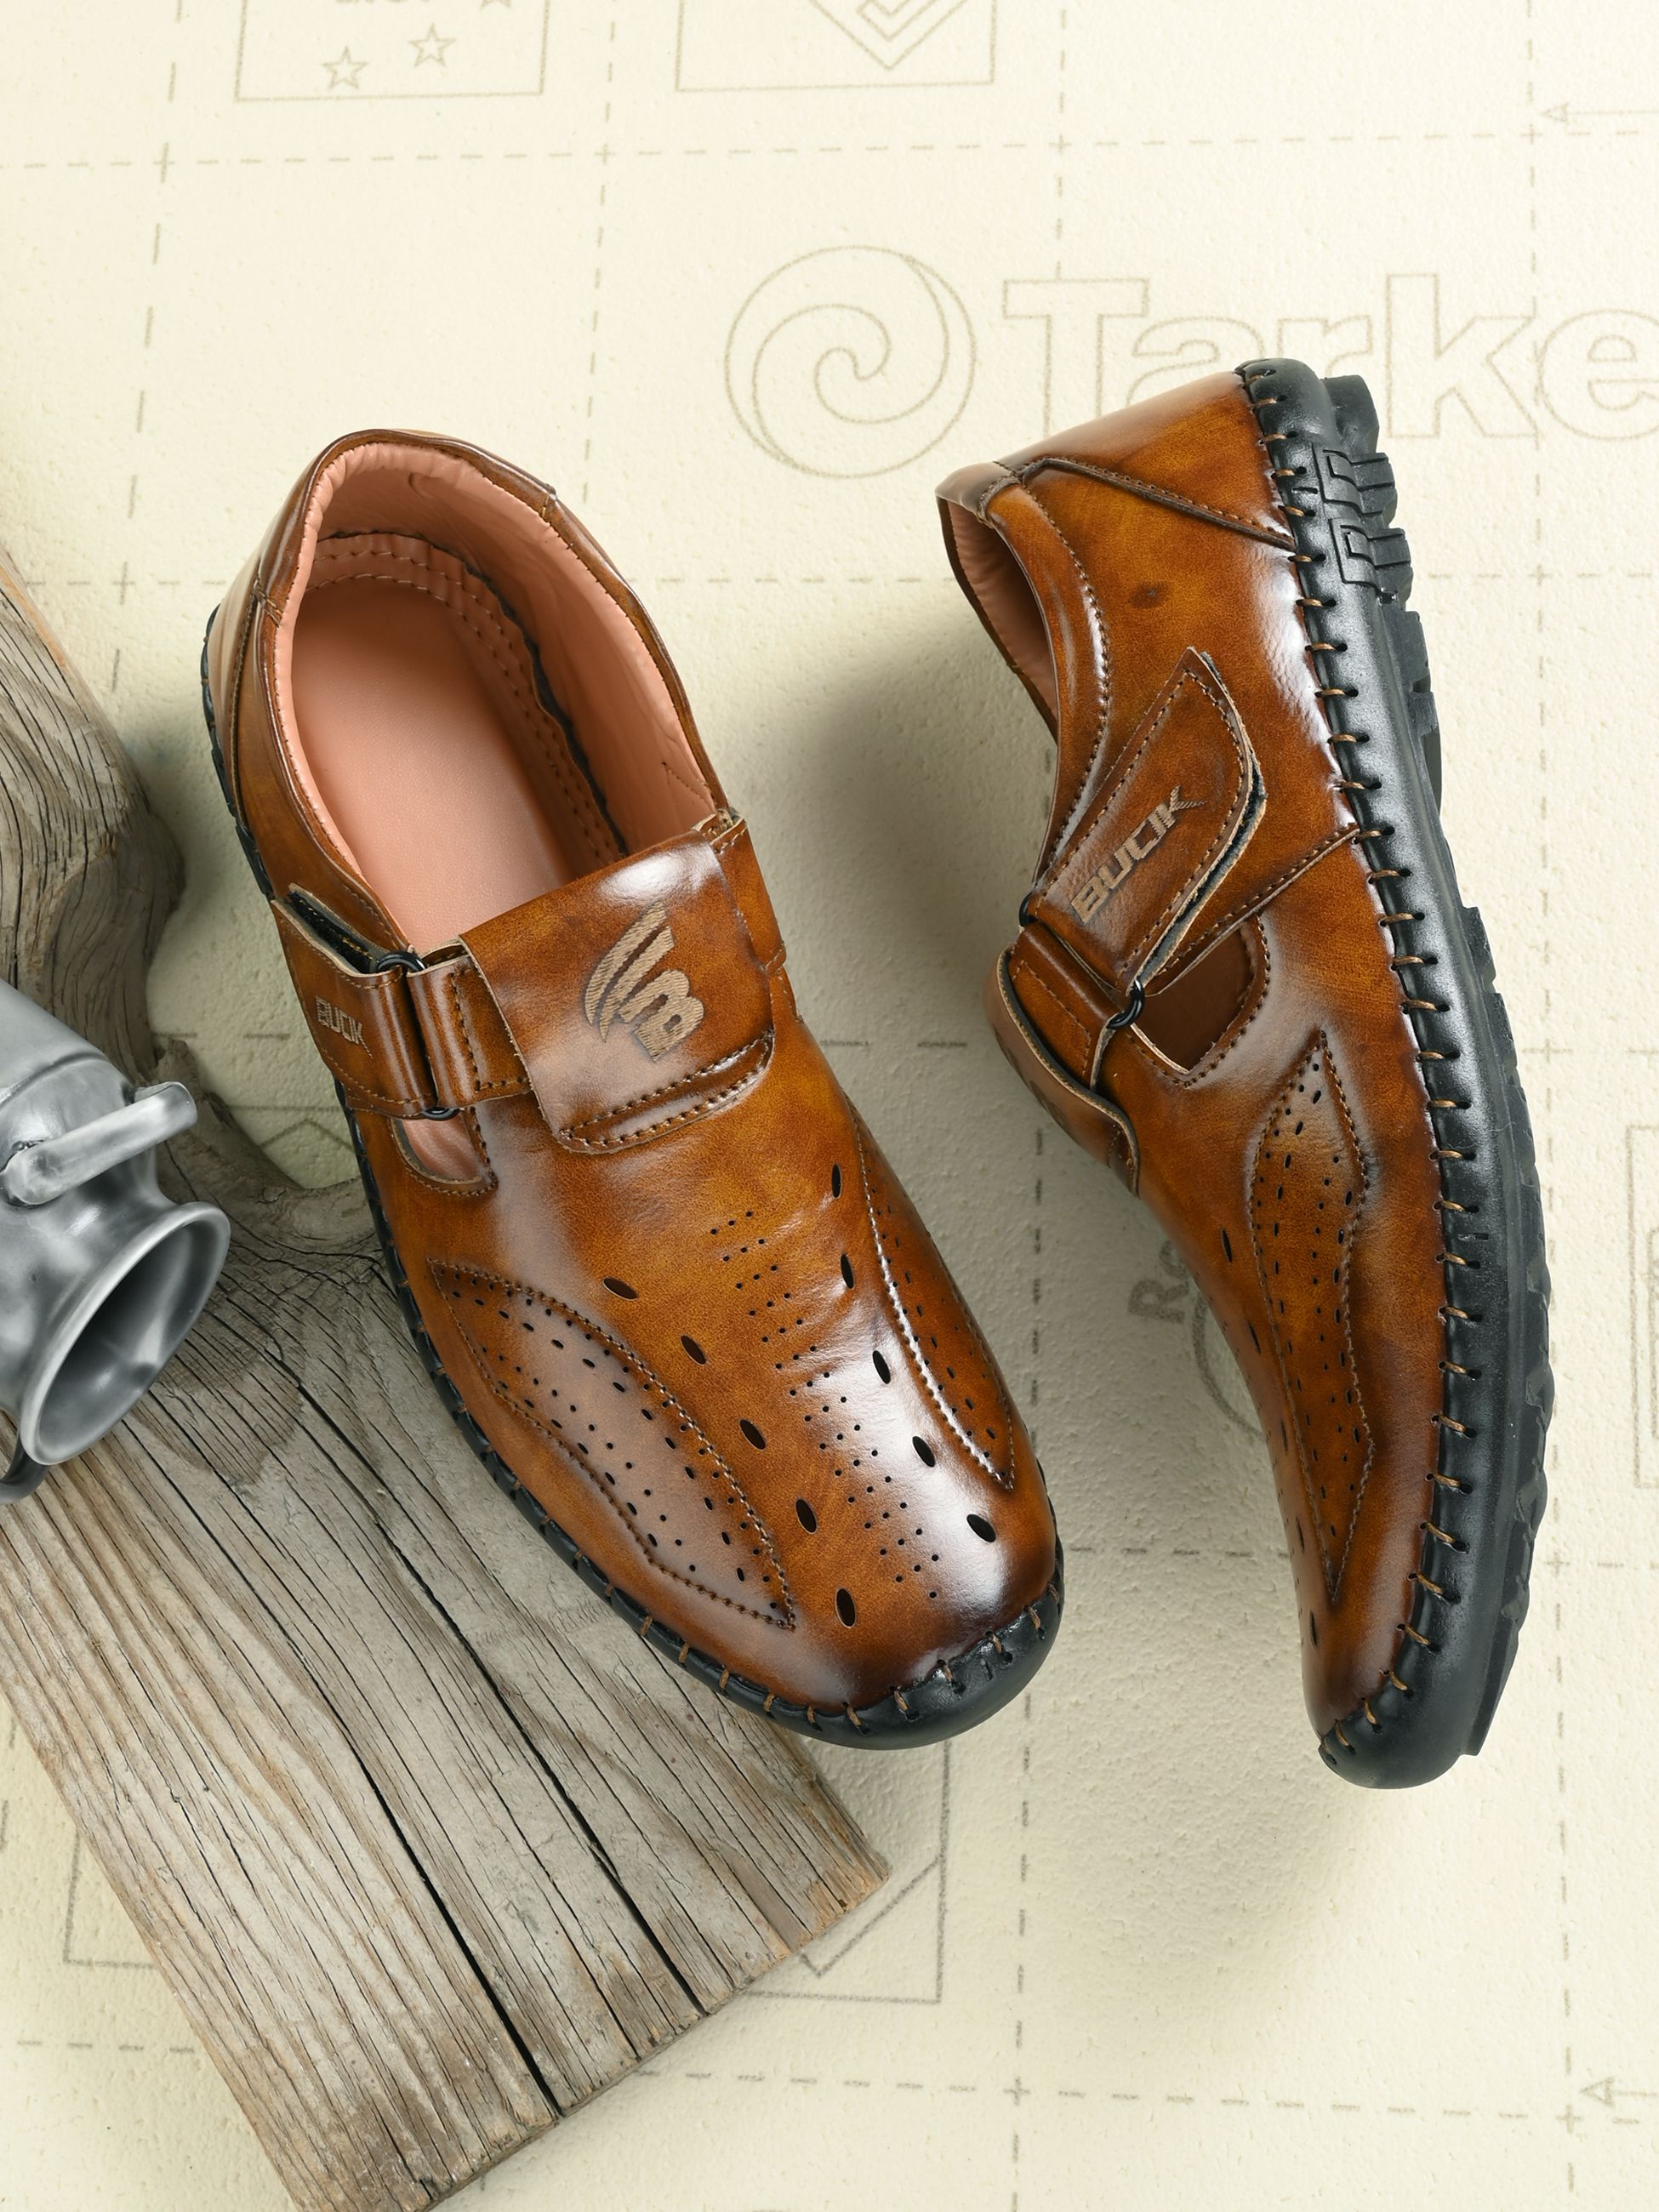     			Bucik - Tan Men's Sandals